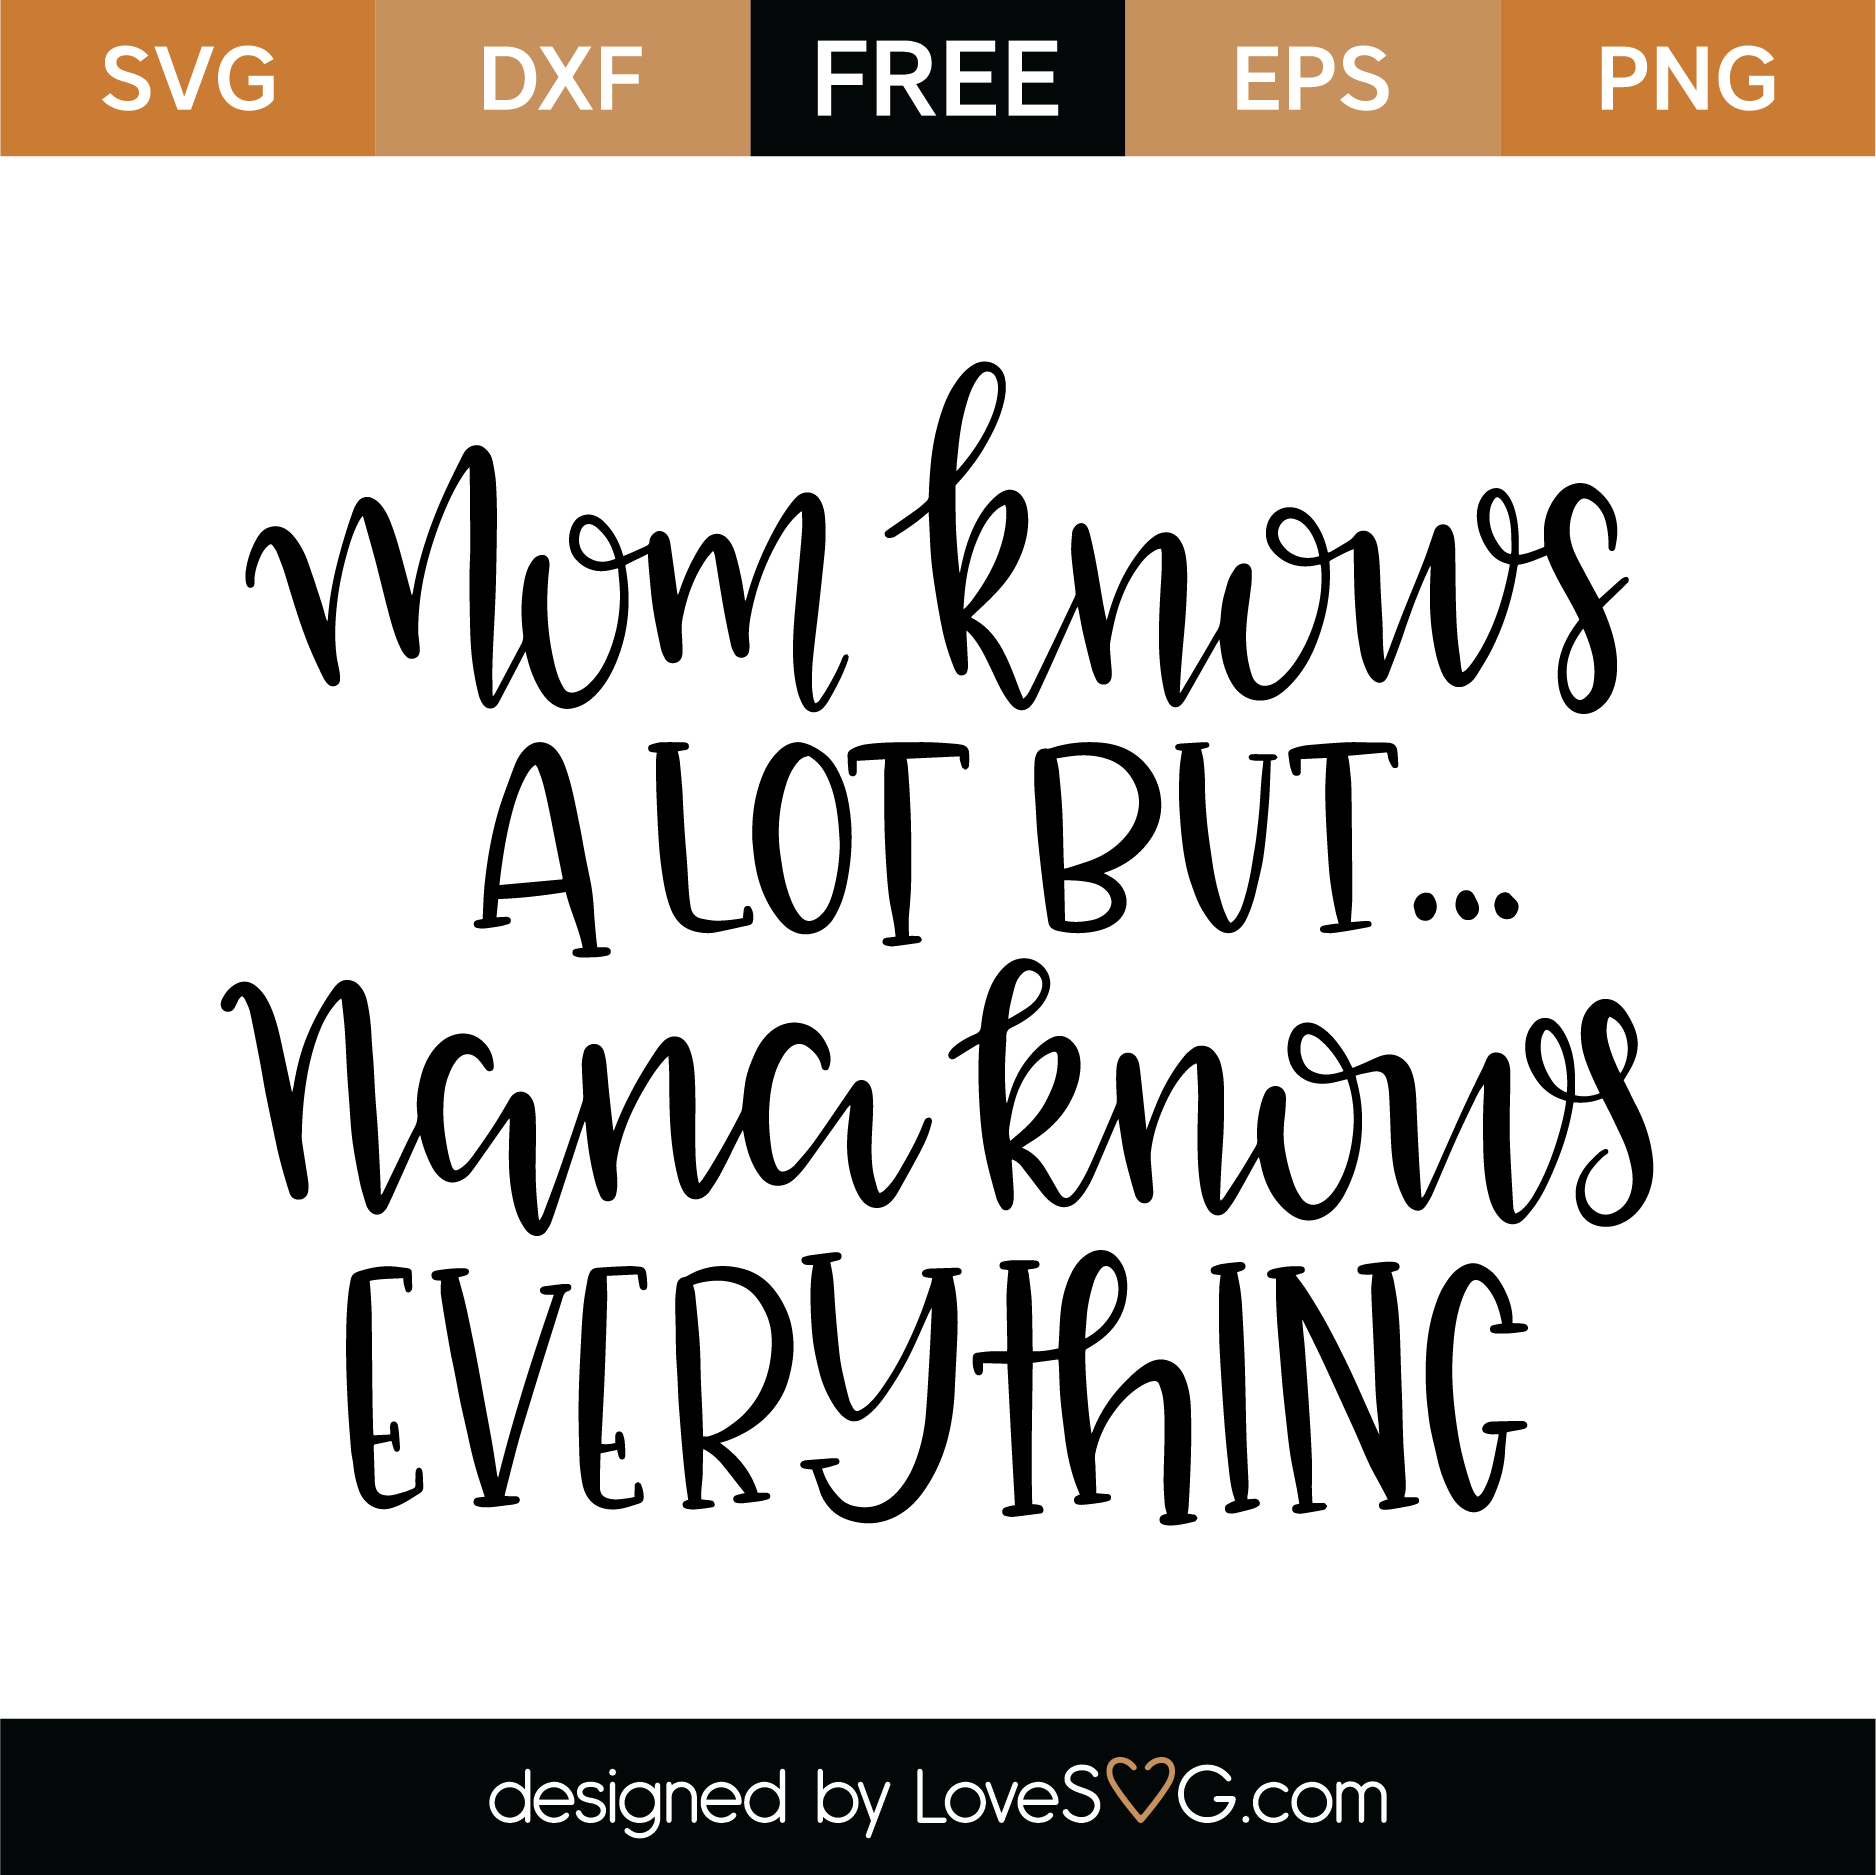 Mom Knows A Lot But Nana Knows Everything Svg Cut File Lovesvg Com